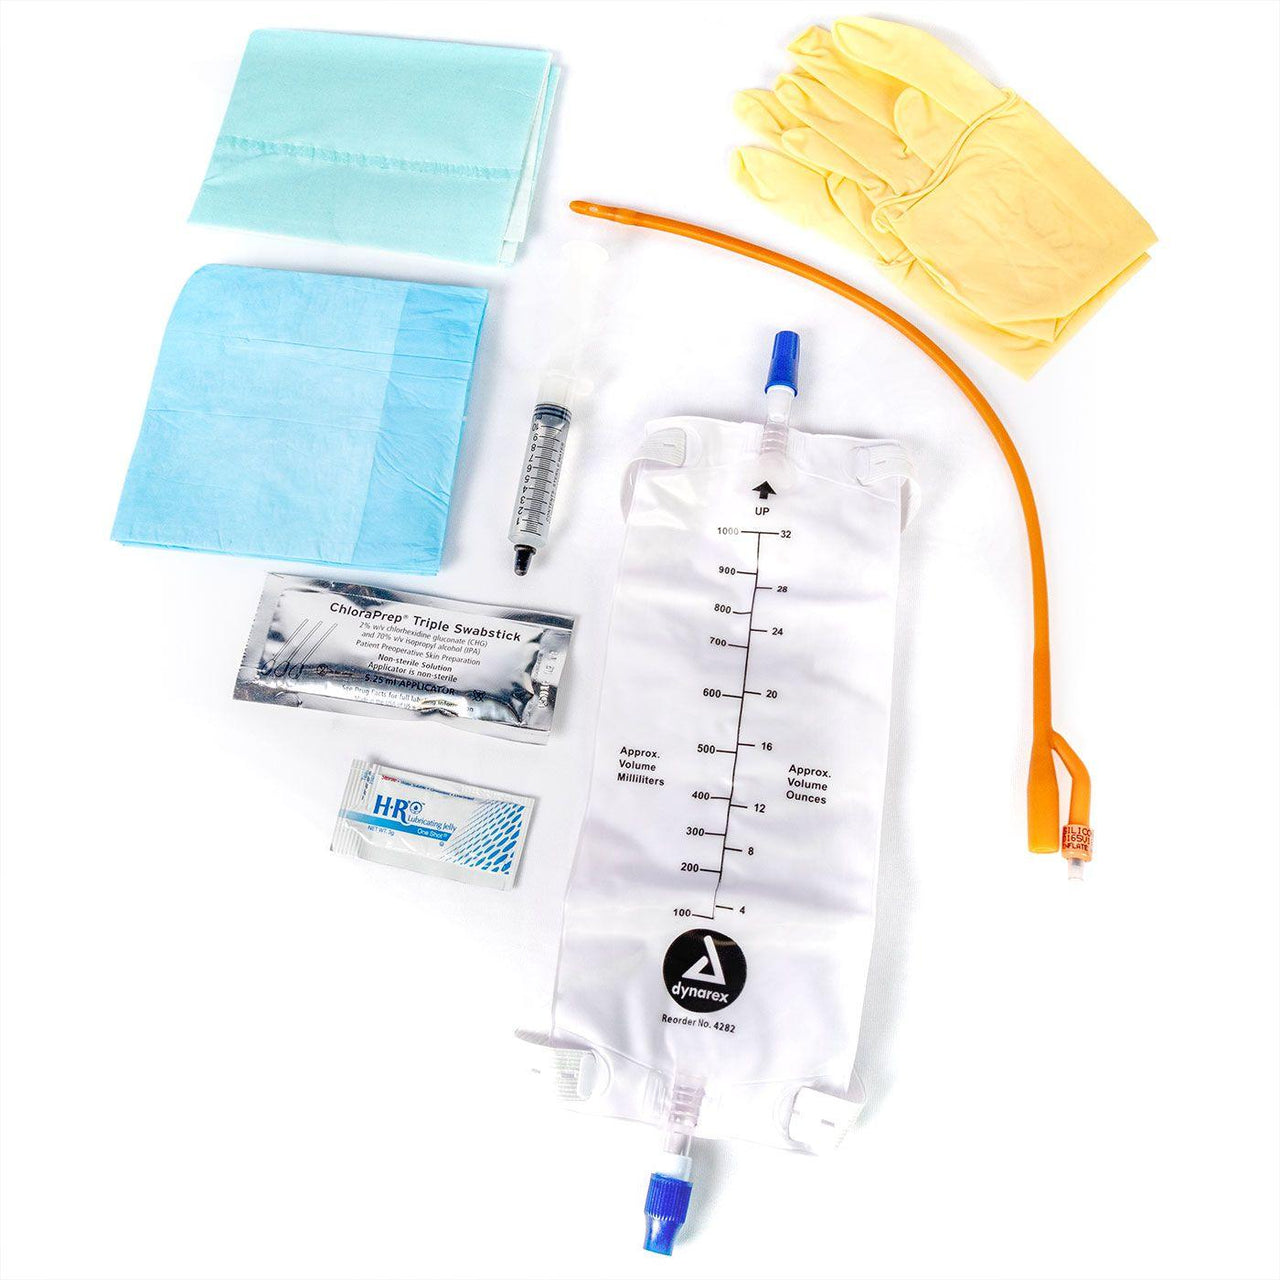 Urinary Catheter Kit - Vendor